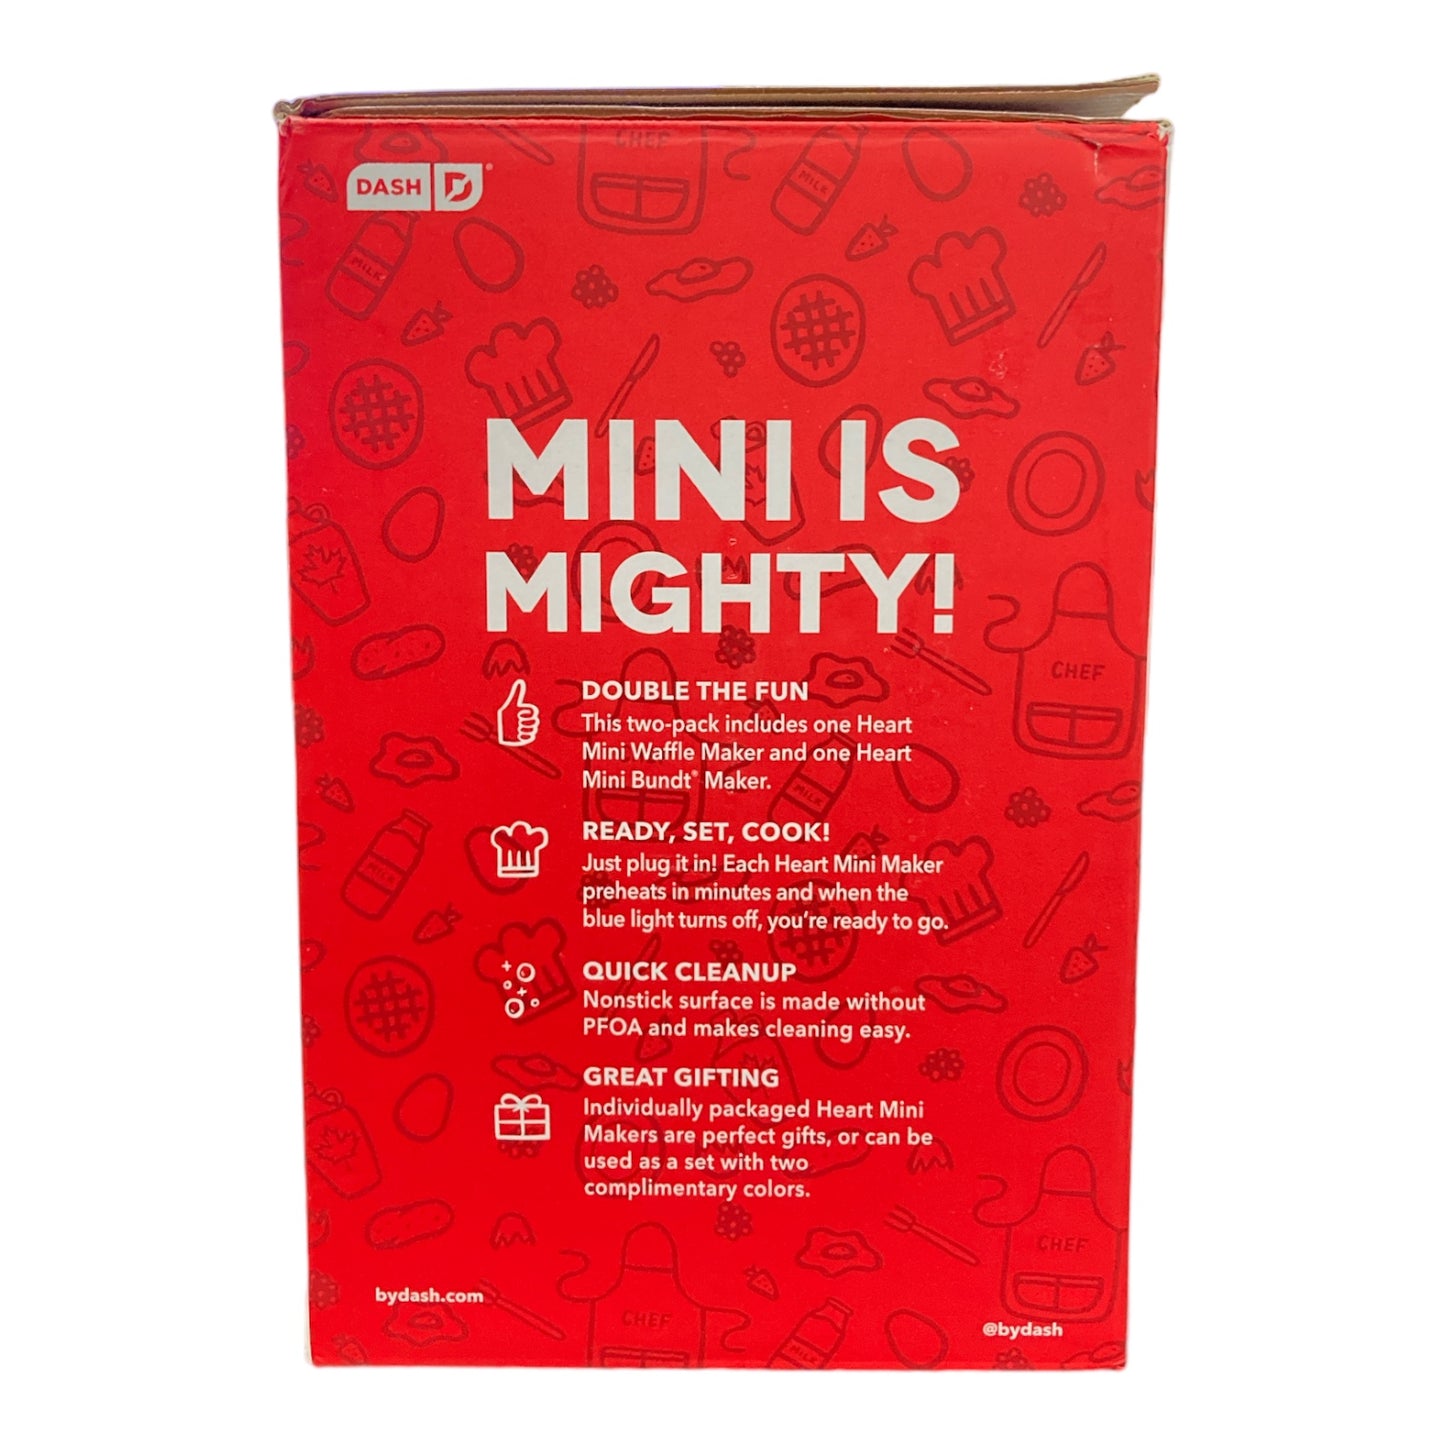 Dash Heart Treat Maker Set of 2, Mini Heart Bundt Cake Maker & Mini Heart Waffle